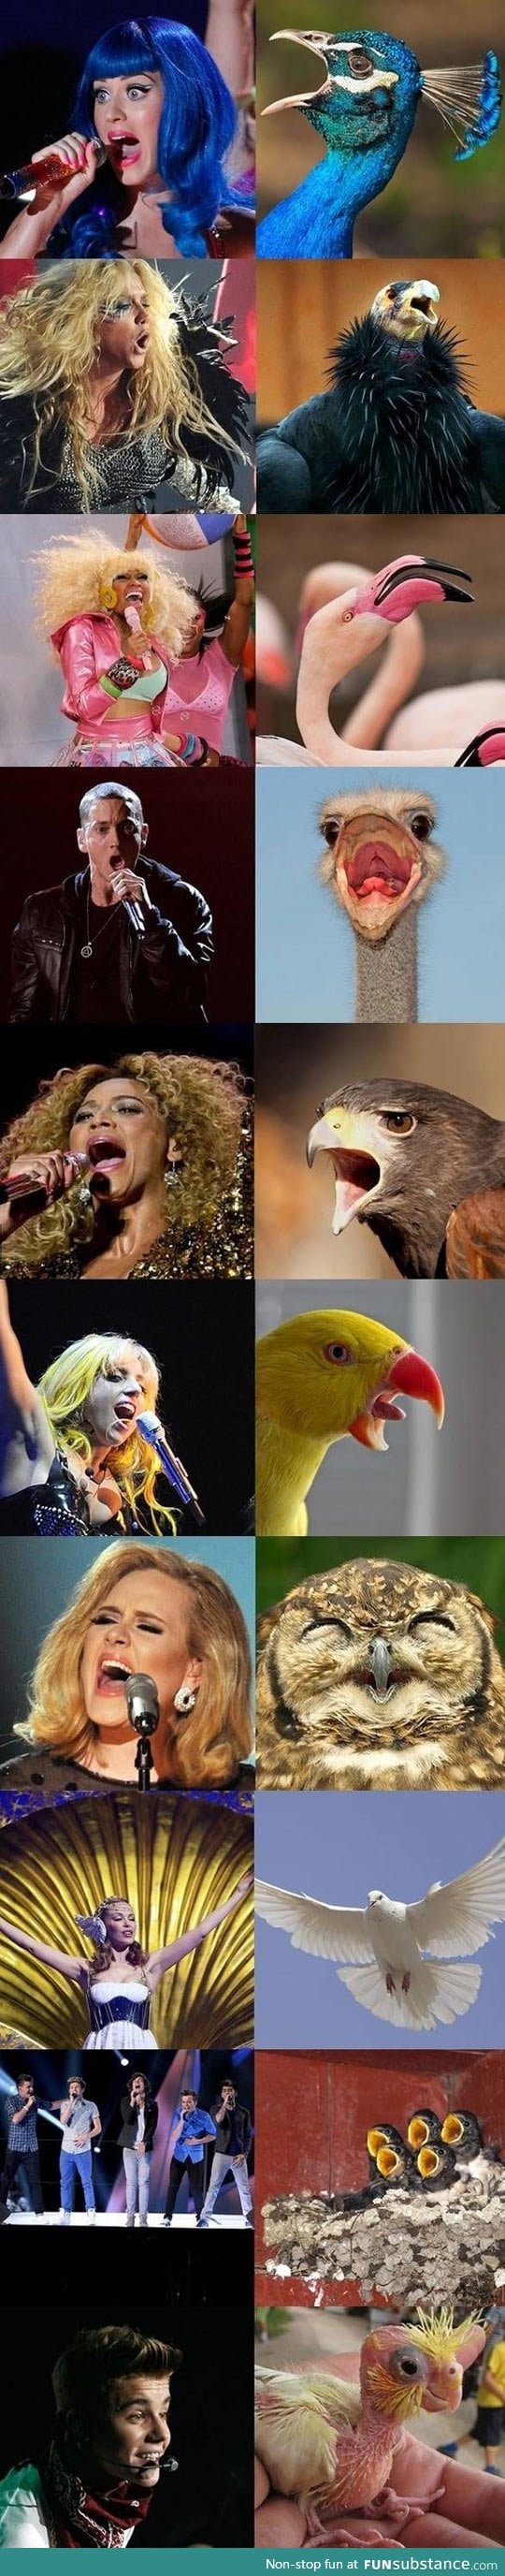 If popstars were birds